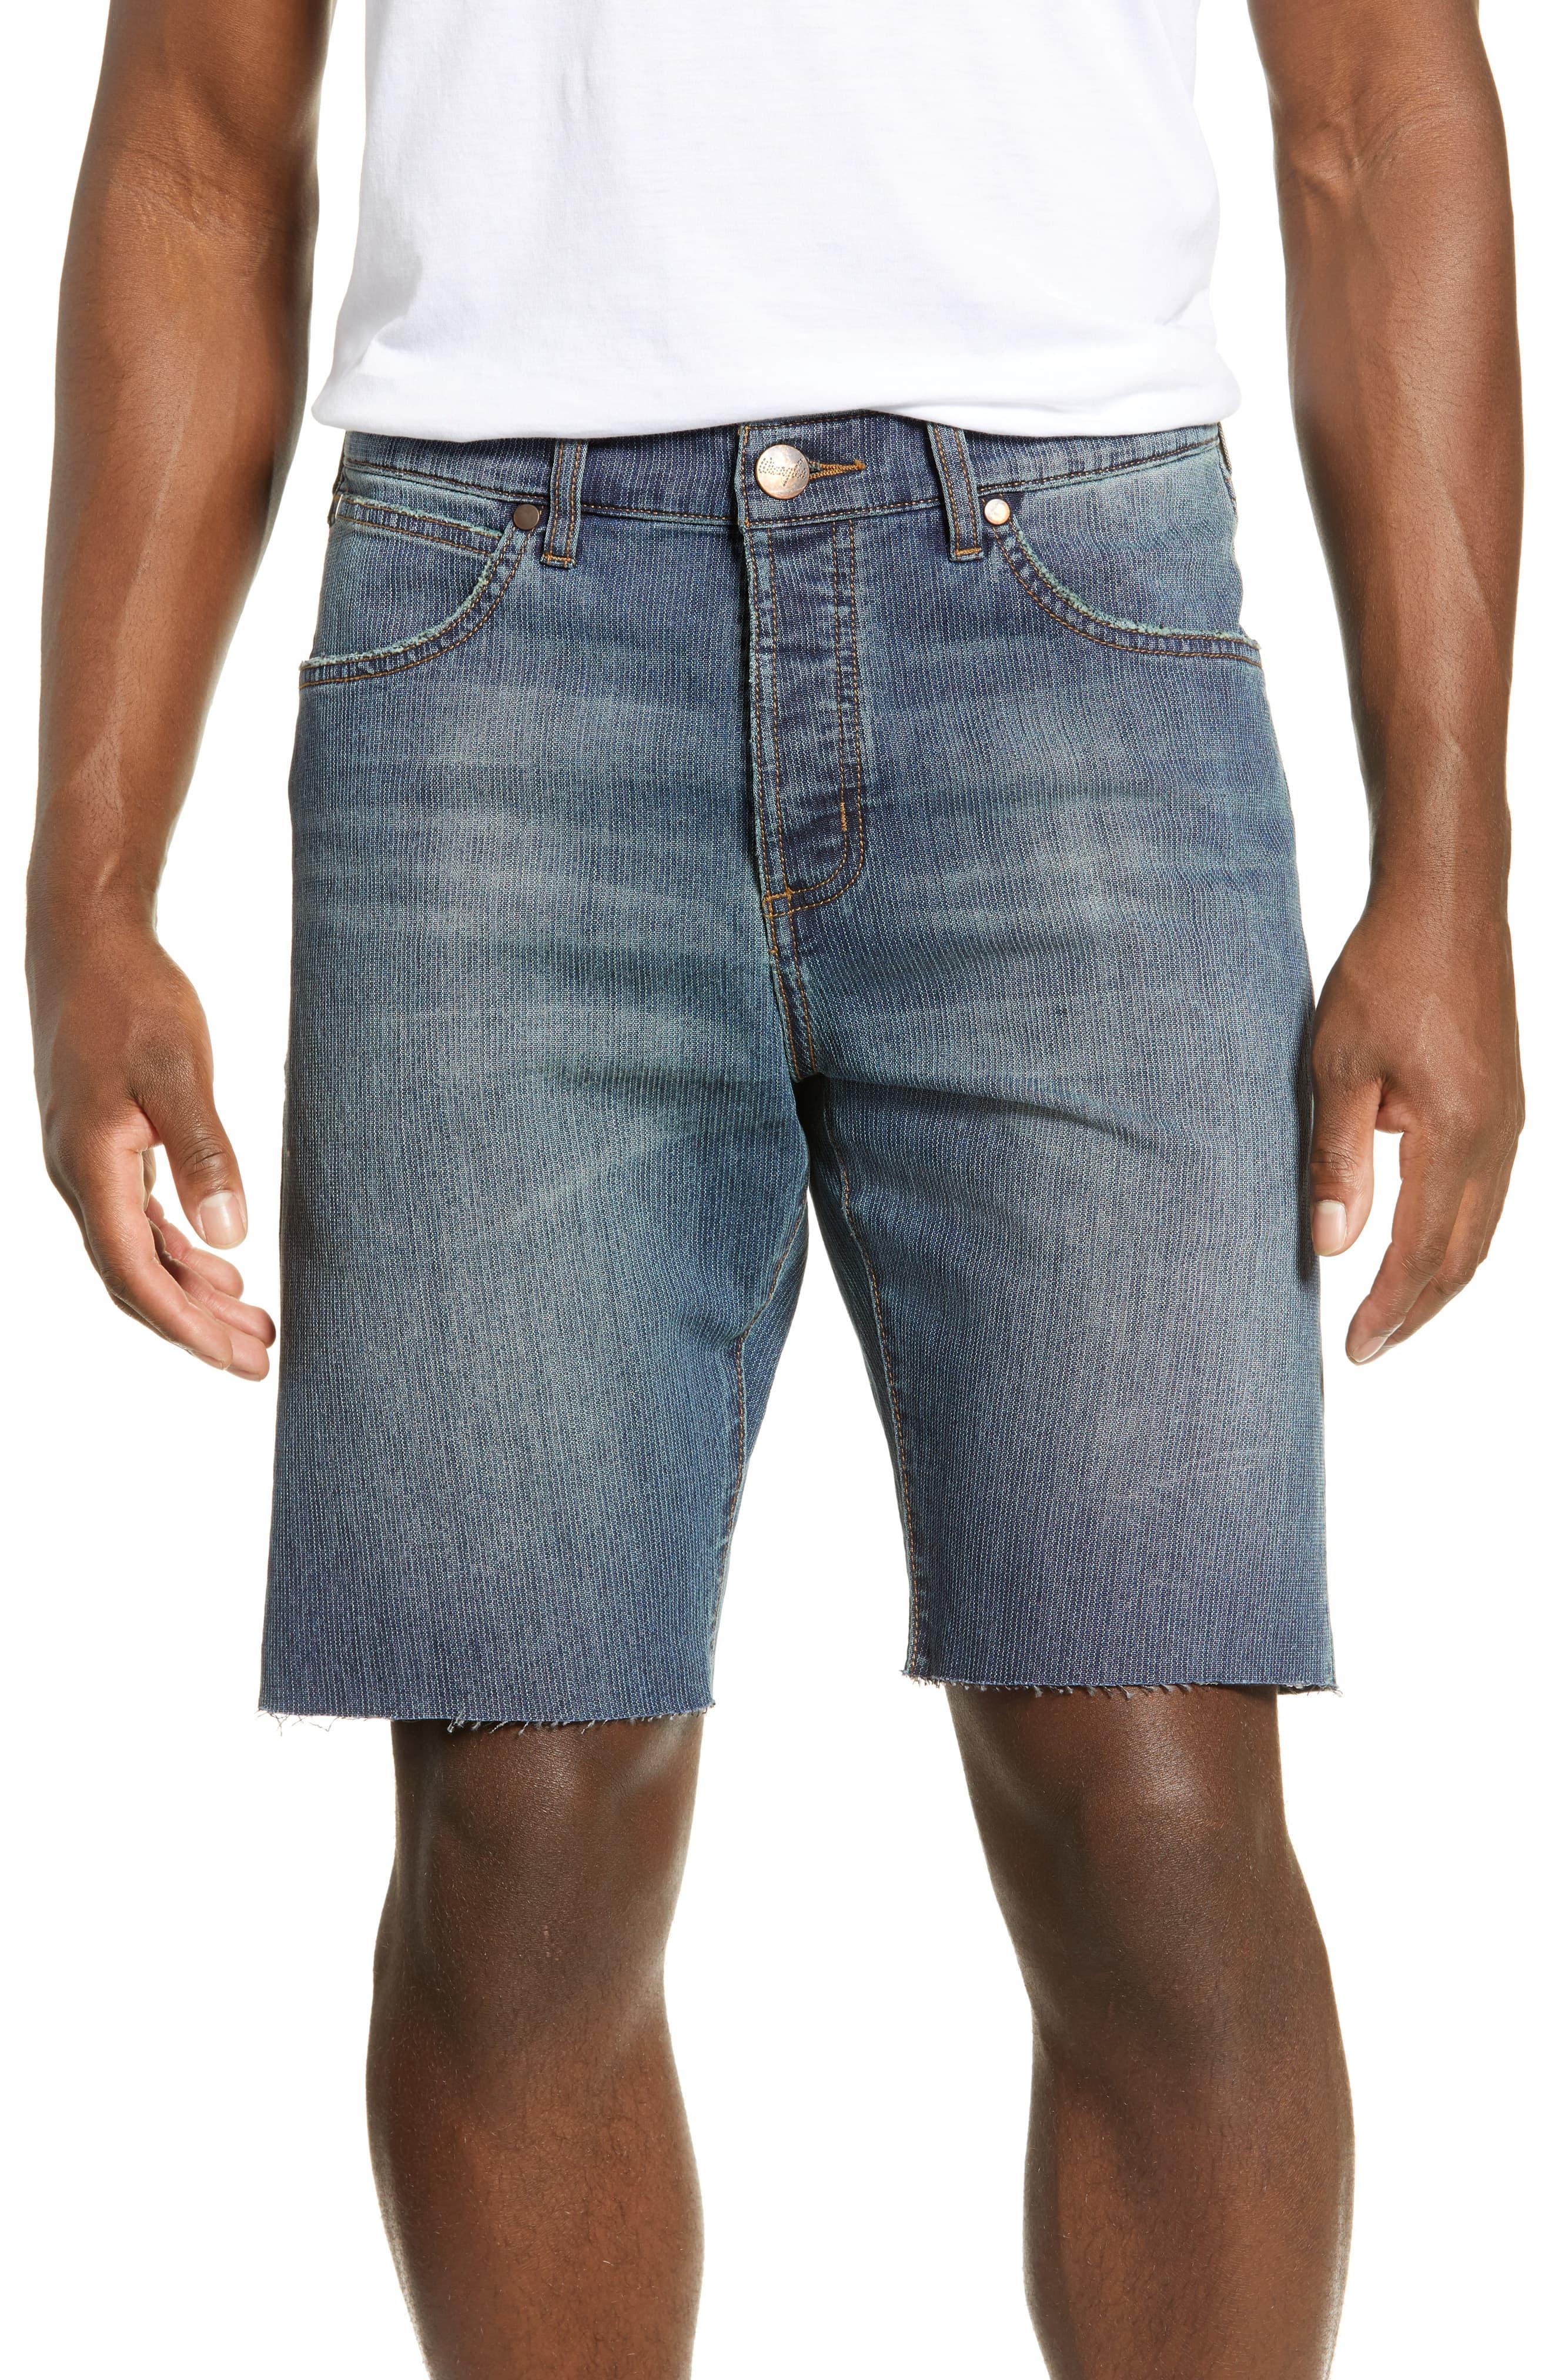 blue jeans shorts for men